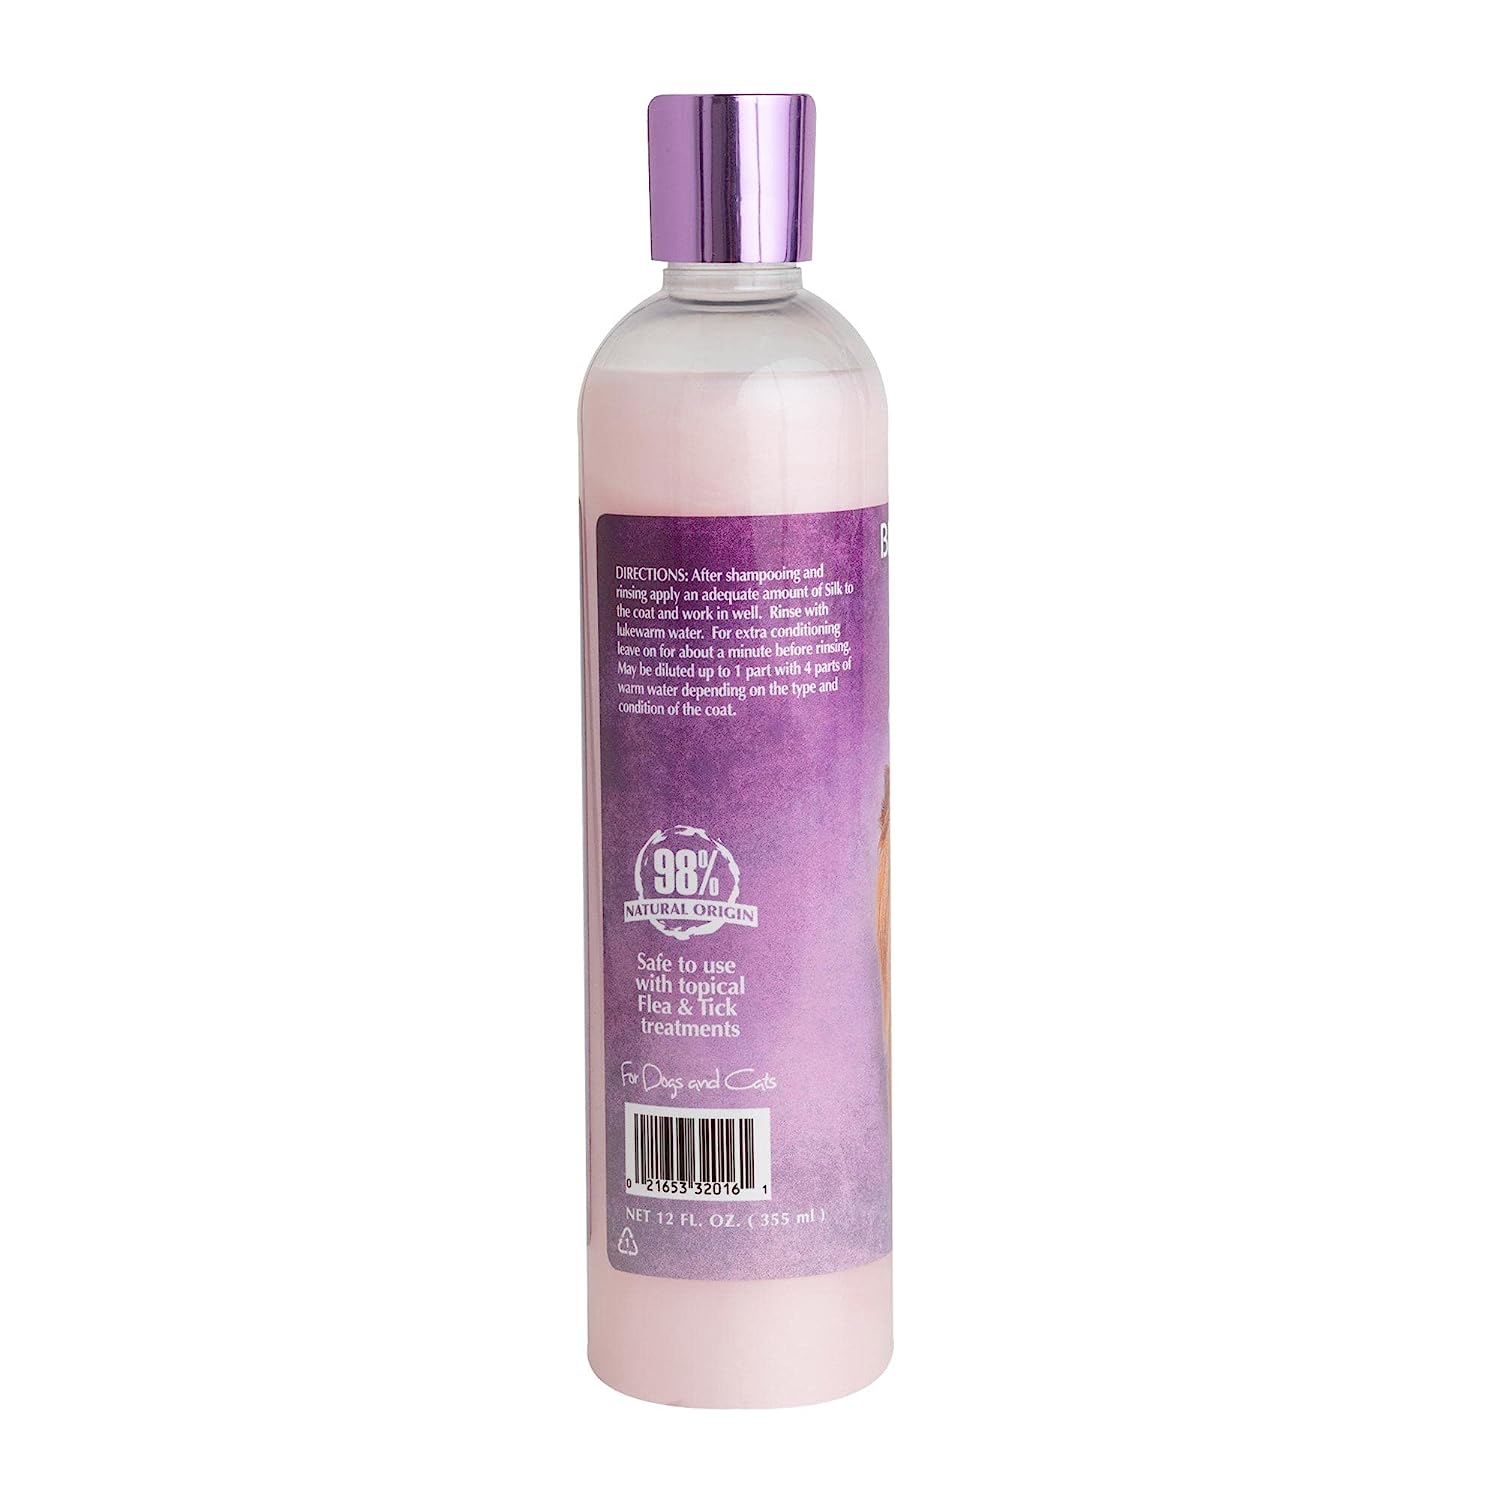 Bio-Groom Silk Creme Rinse Dog Conditioner, 355 ml